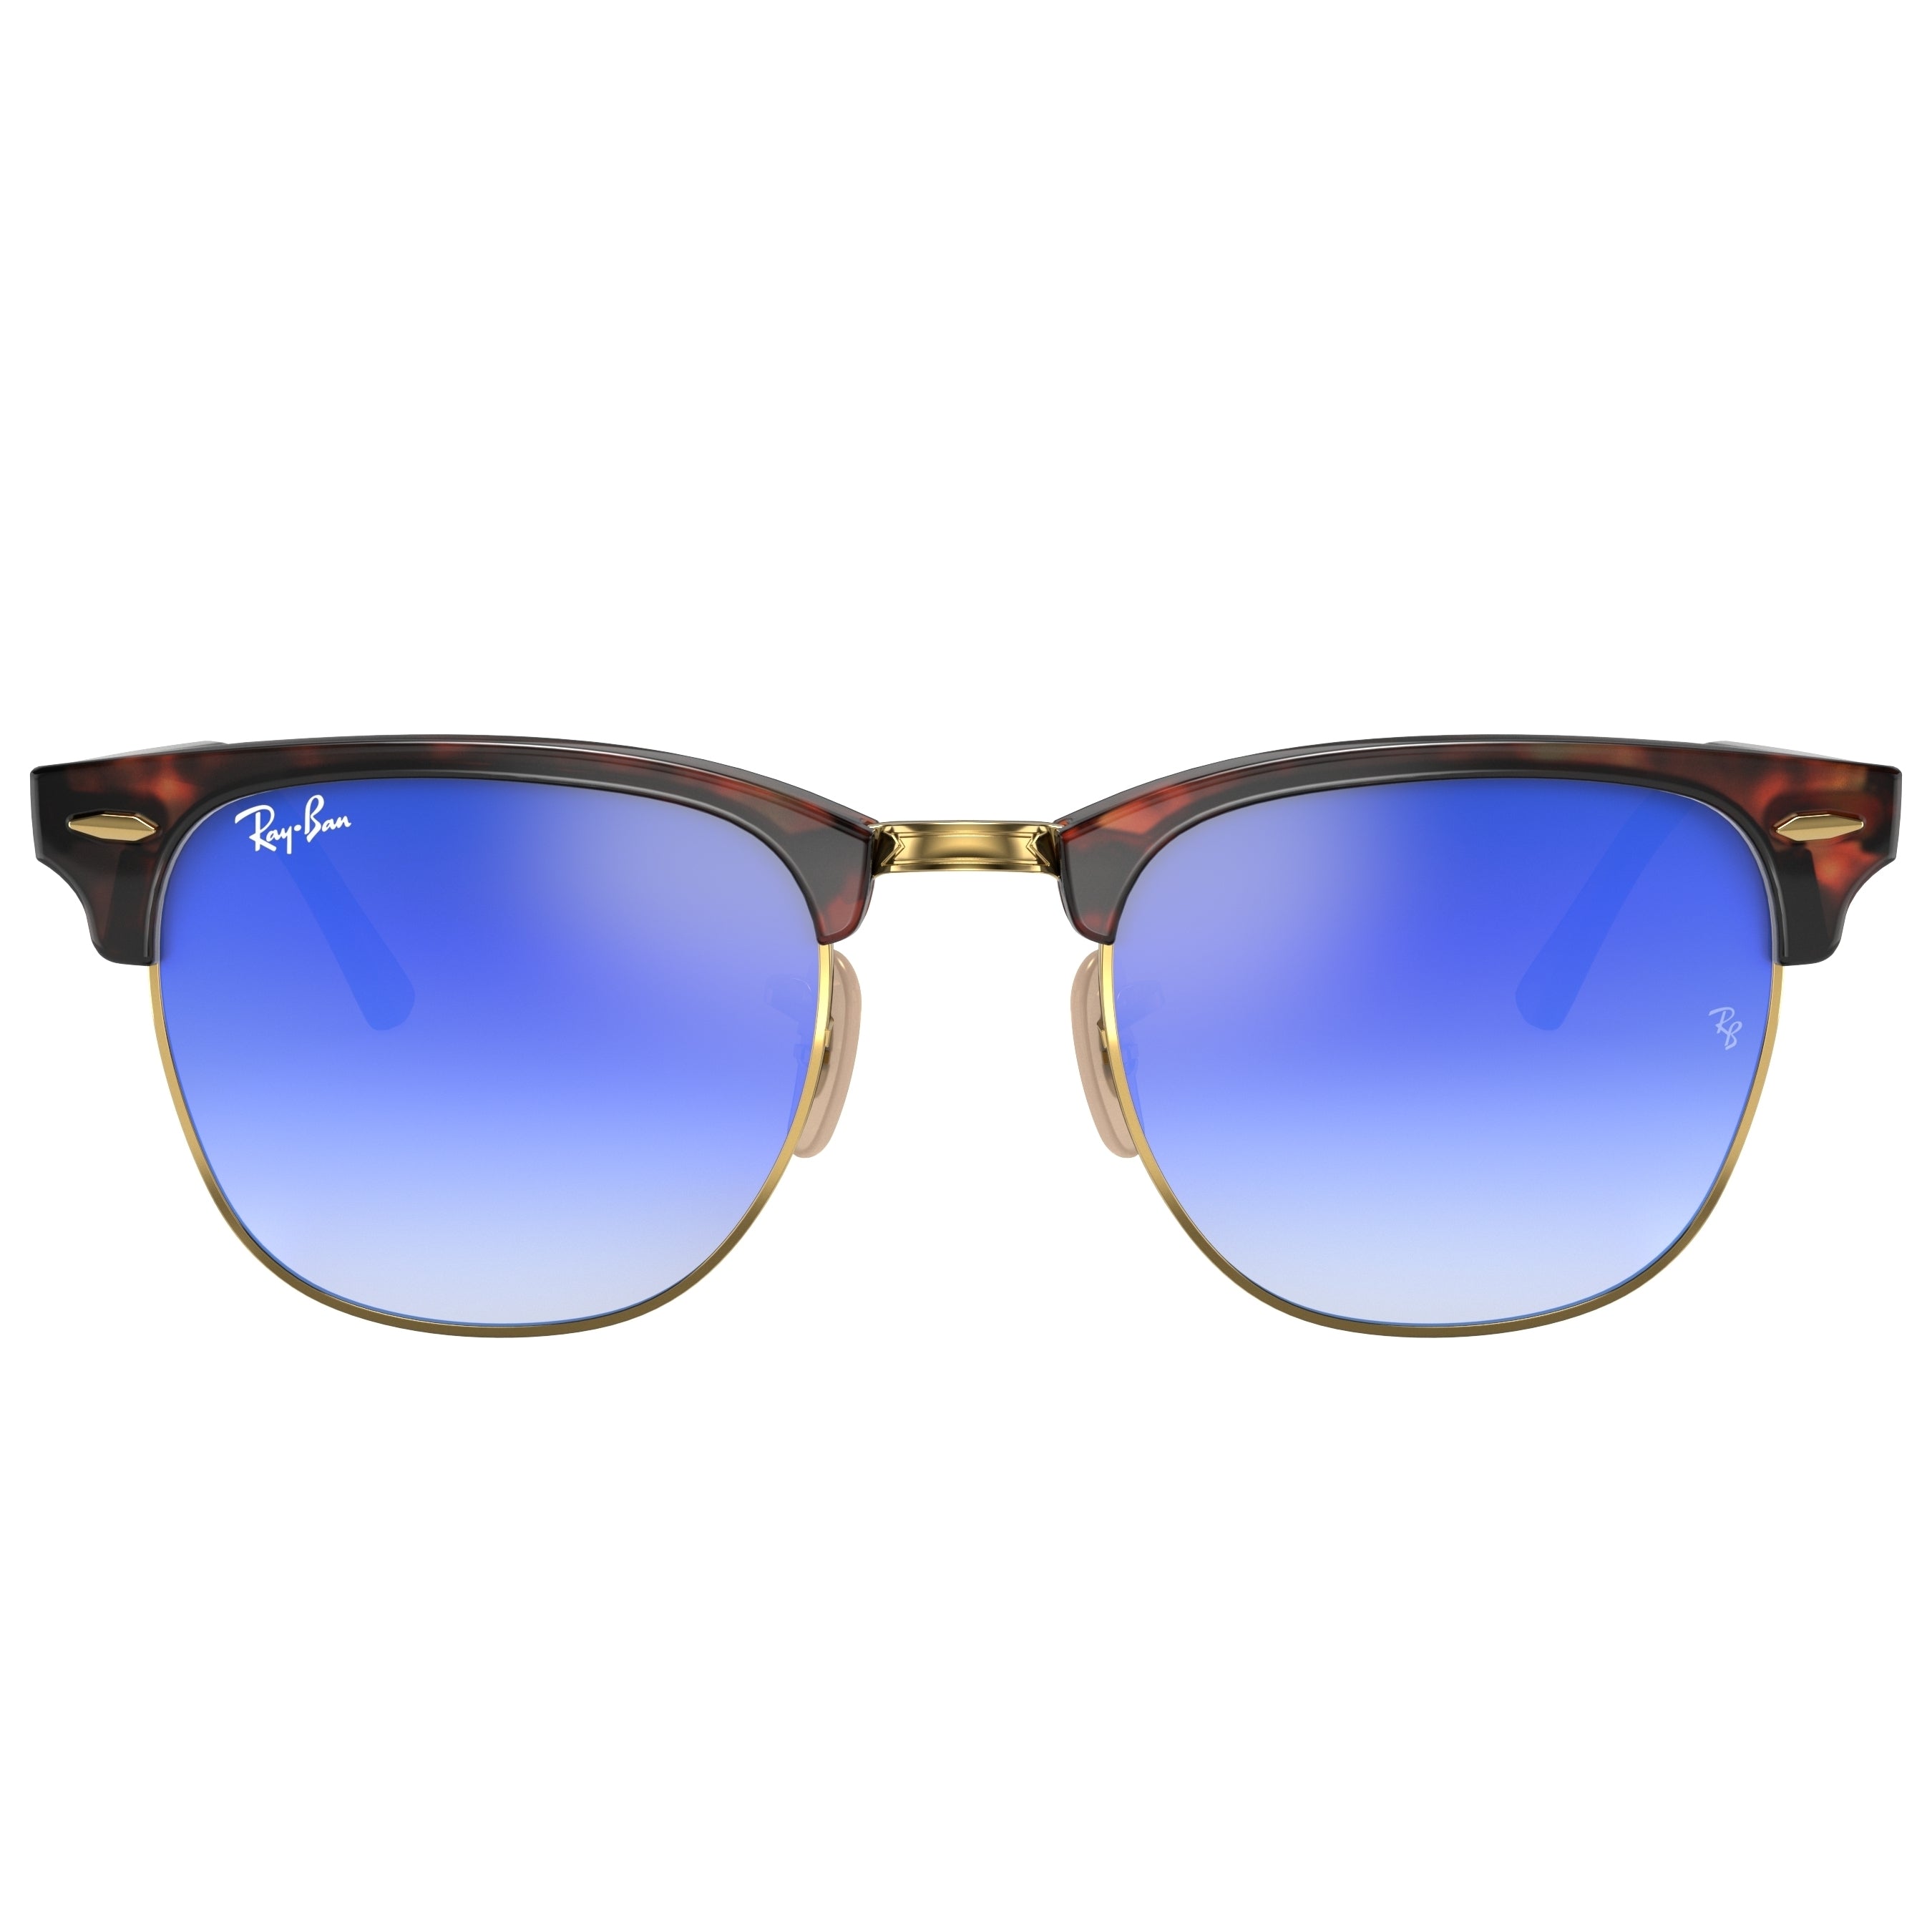 Ray-Ban Clubmaster Flash Lenses Gradient Blue Gradient Square Unisex Sunglasses RB3016 990/7Q 51